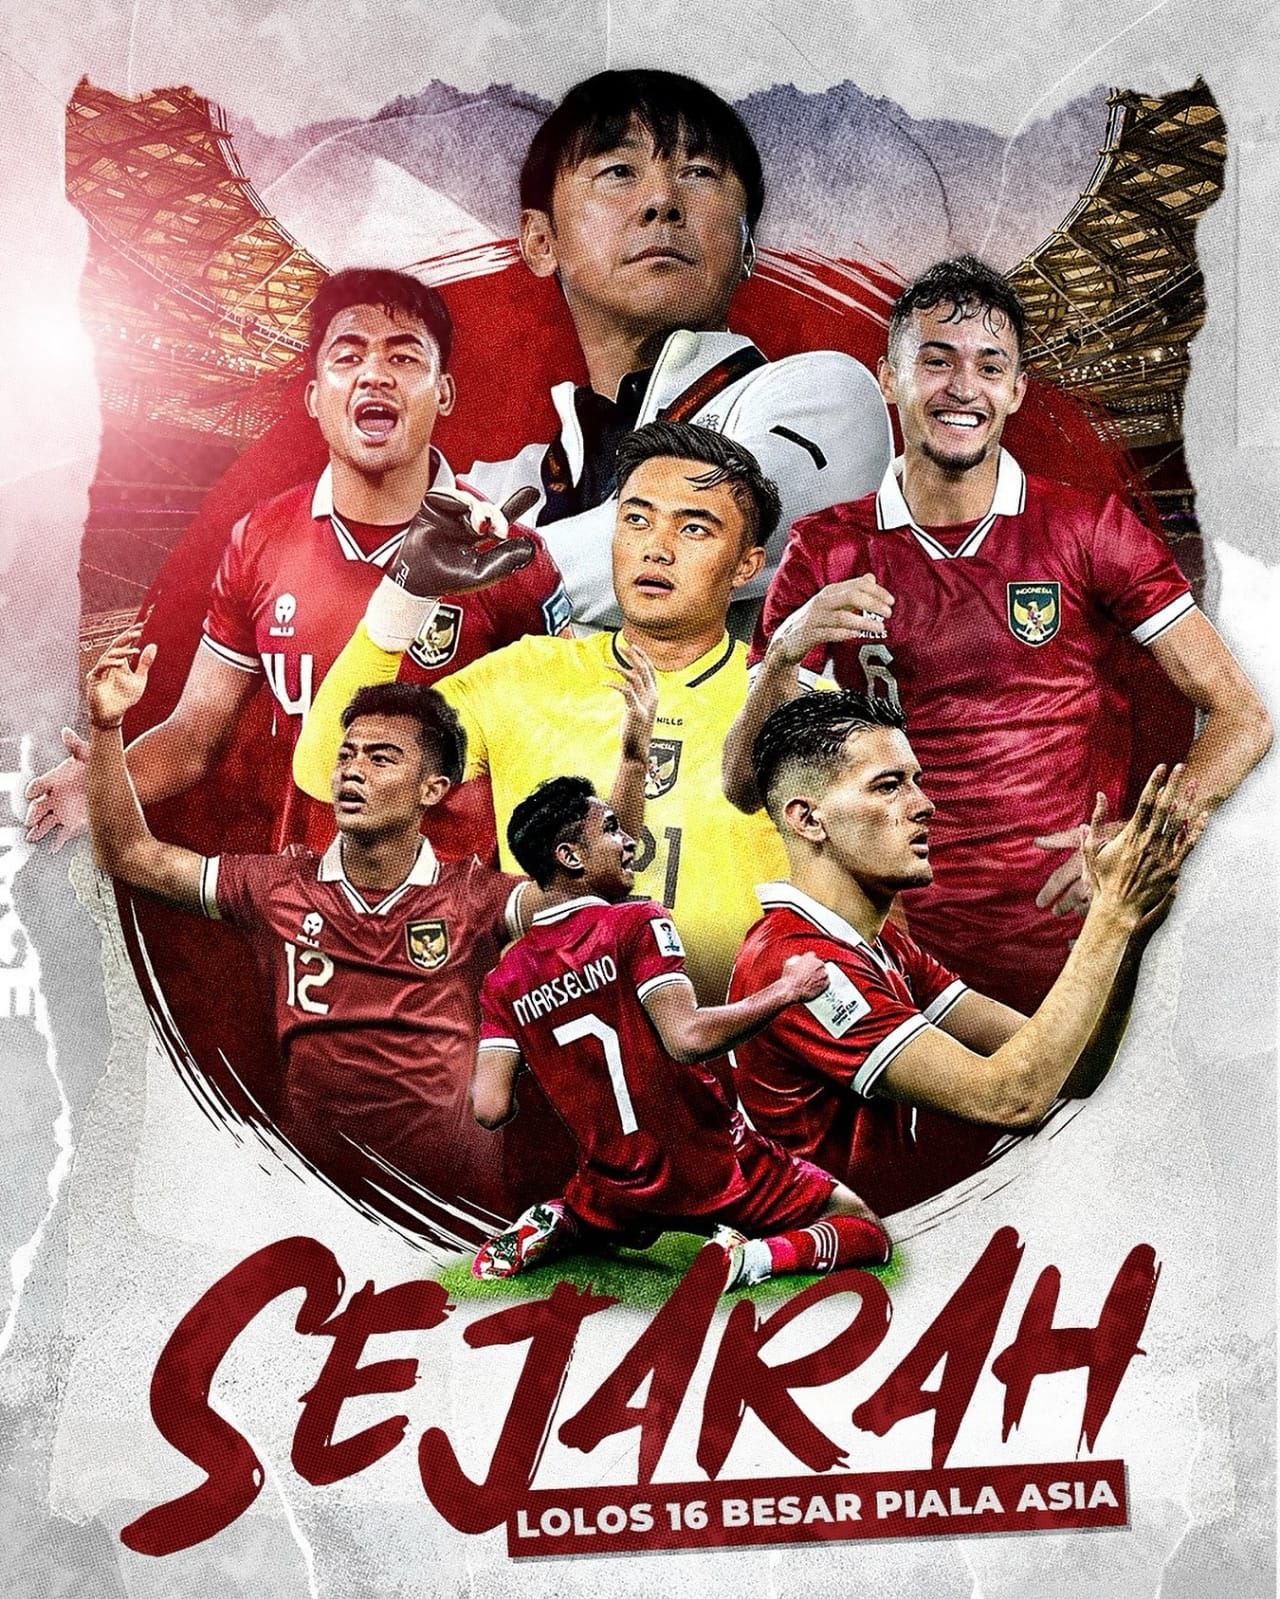 Timnas Indonesia Sejarah Lolos 16 Besar Piala Asia